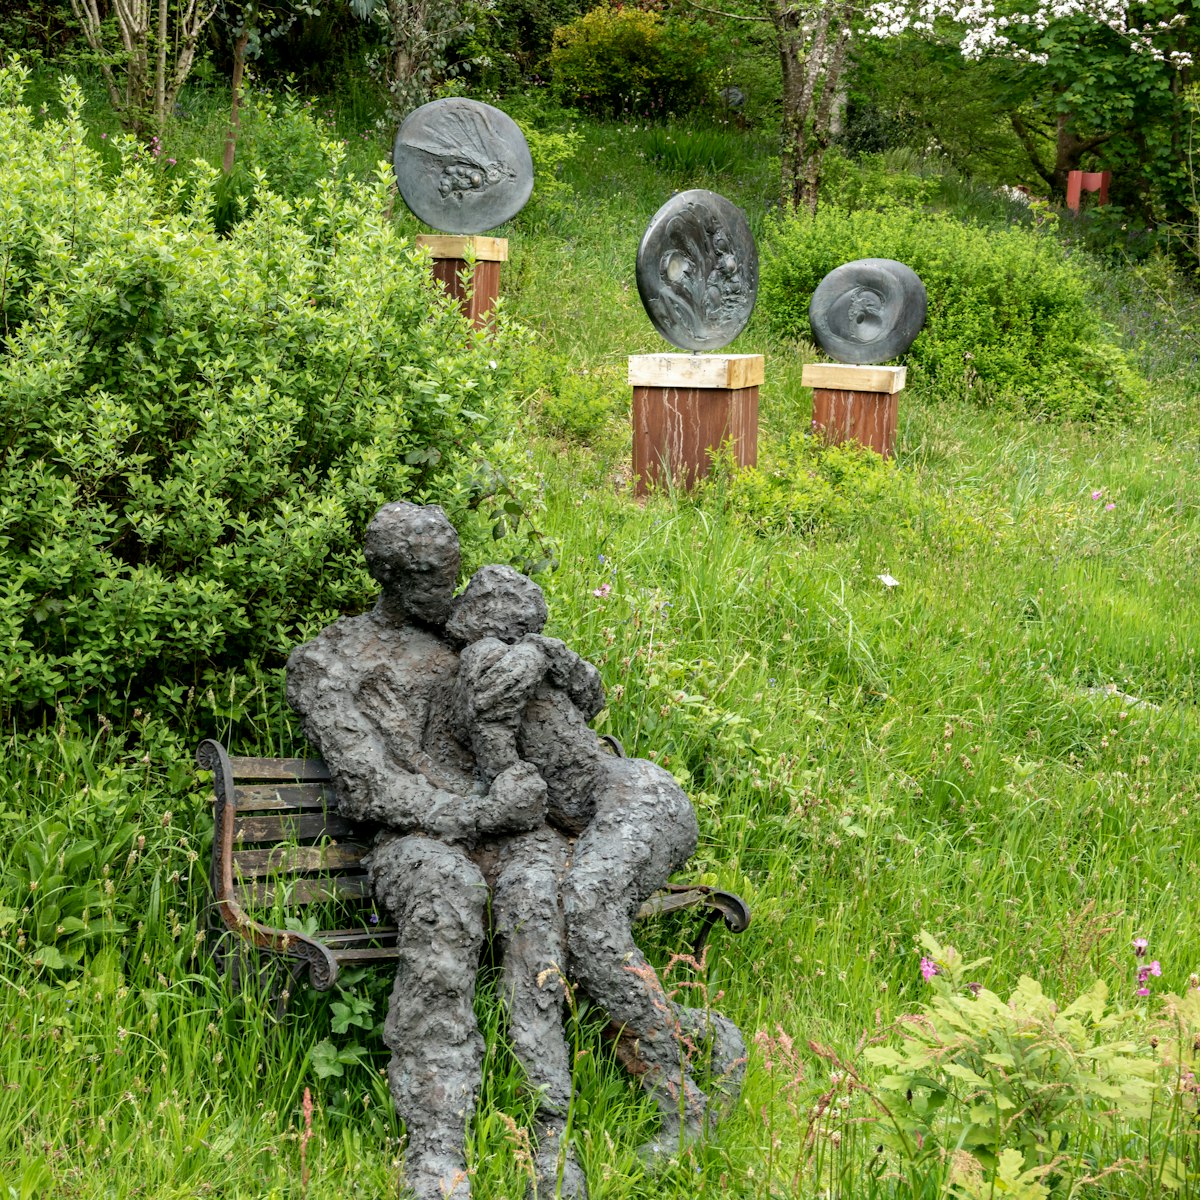 Broomhill Sculpture Gardens, Muddiford, Barnstaple, North Devon, UK.